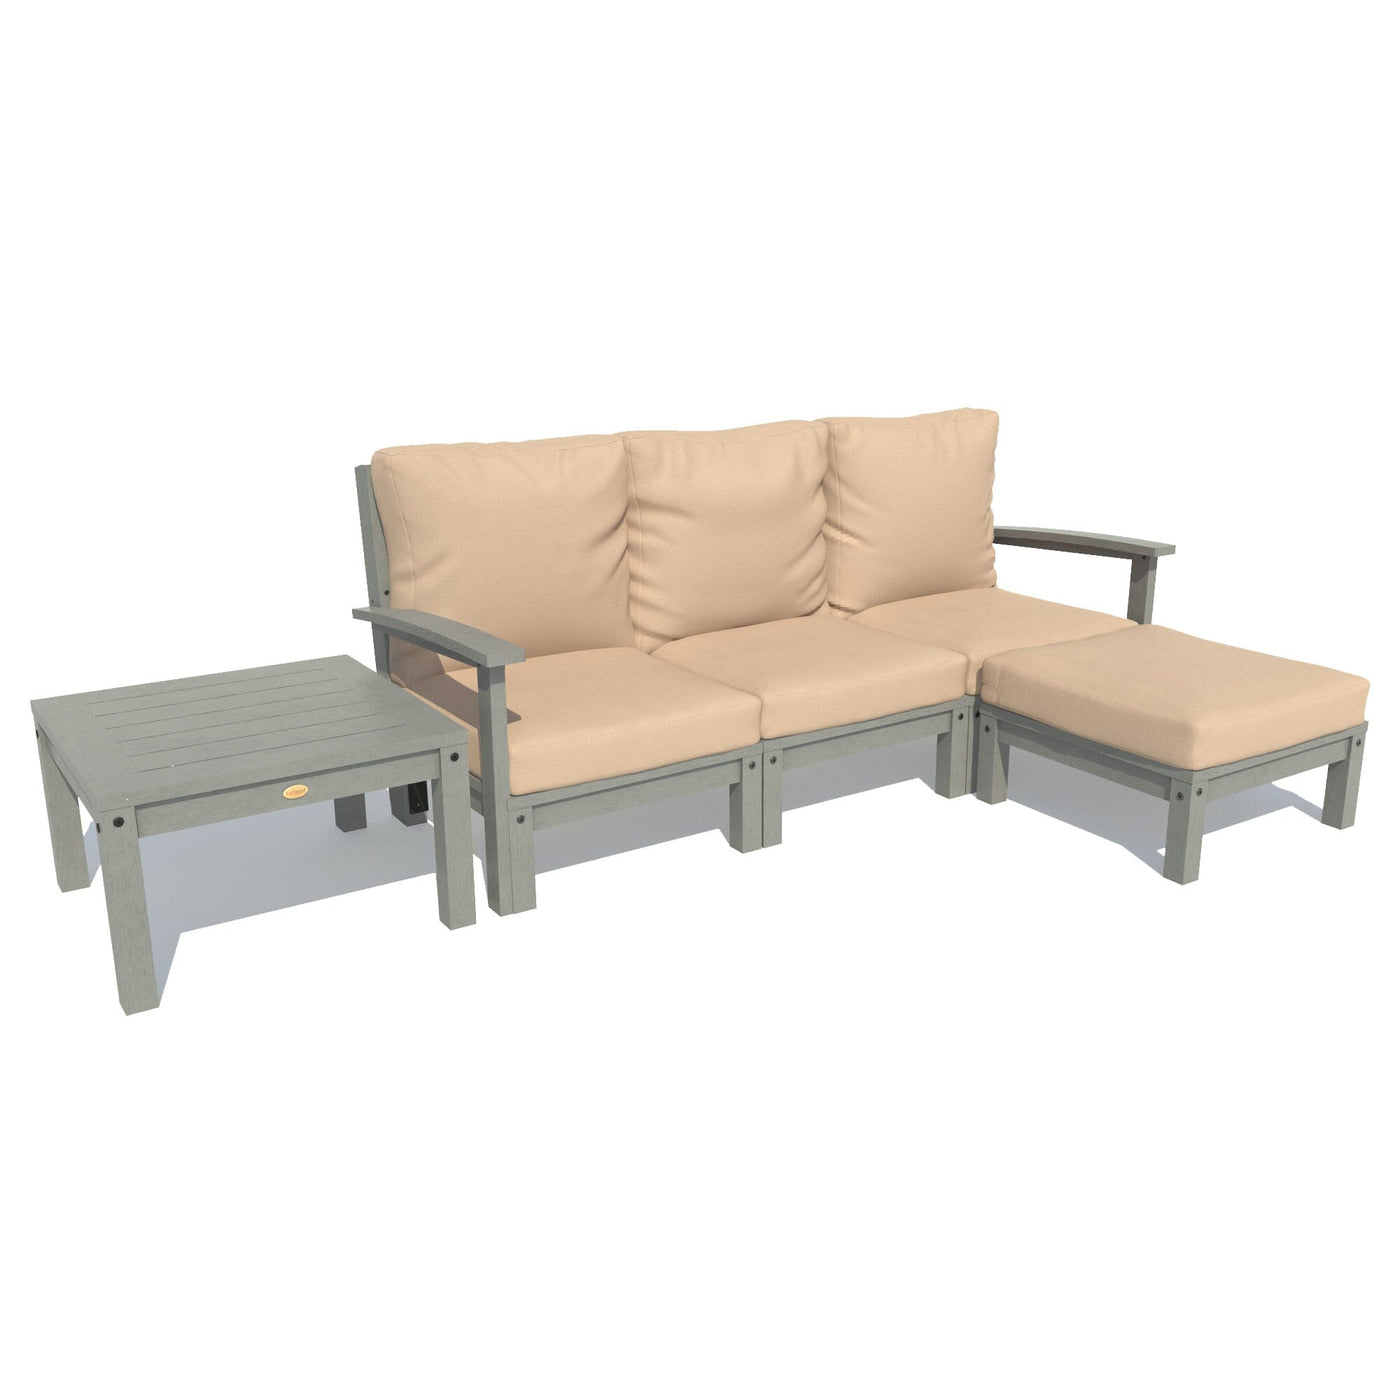 Bespoke Deep Seating: Sofa, Ottoman, and Side Table Deep Seating Highwood USA Driftwood Coastal Teak 